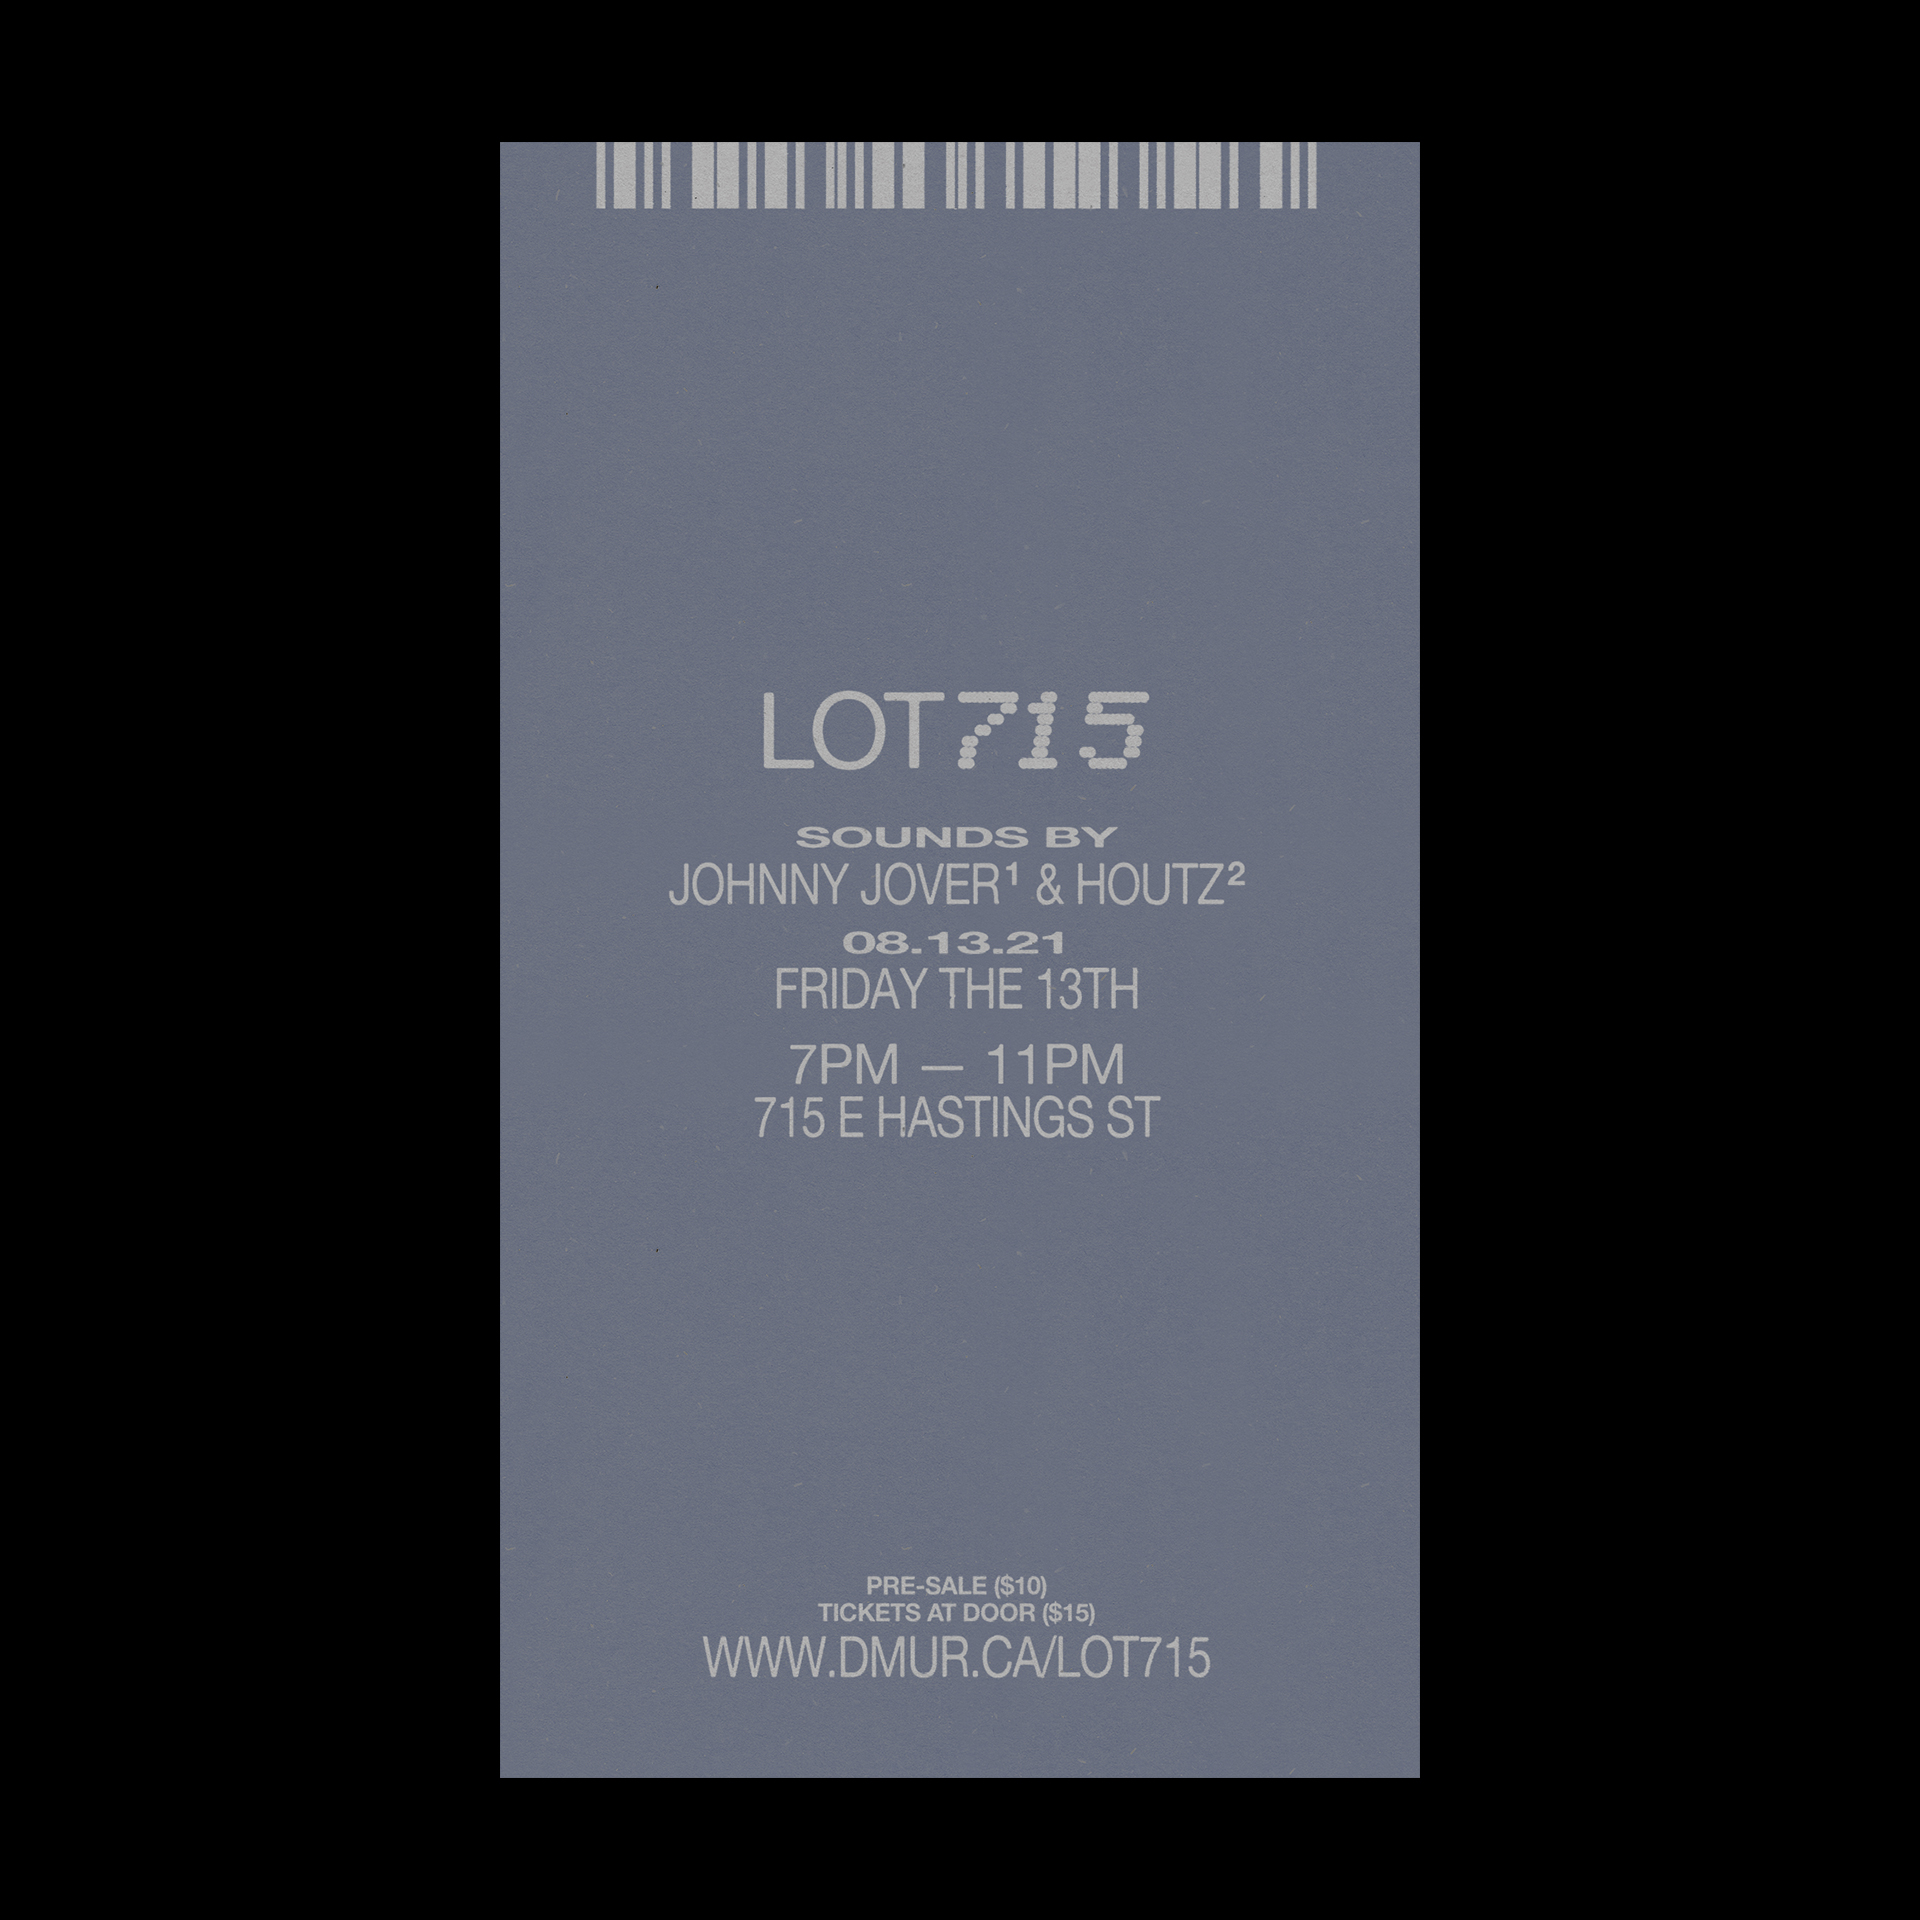 Lot715-event-02